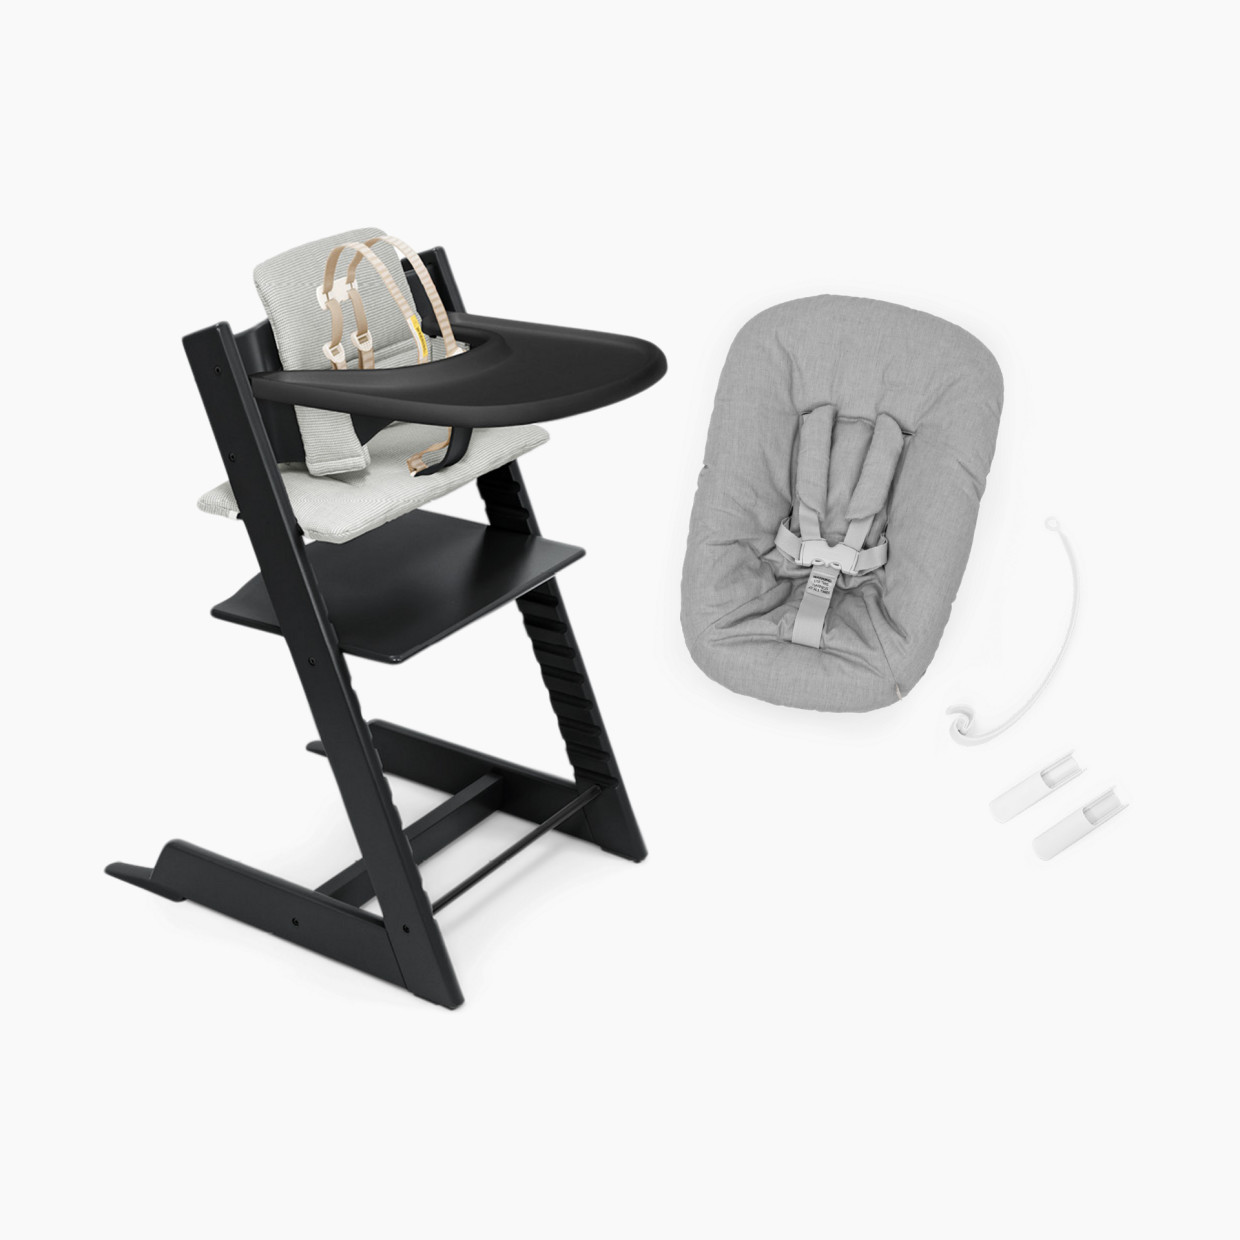 Stokke Tripp Trapp High Chair Complete + Newborn Set - Black